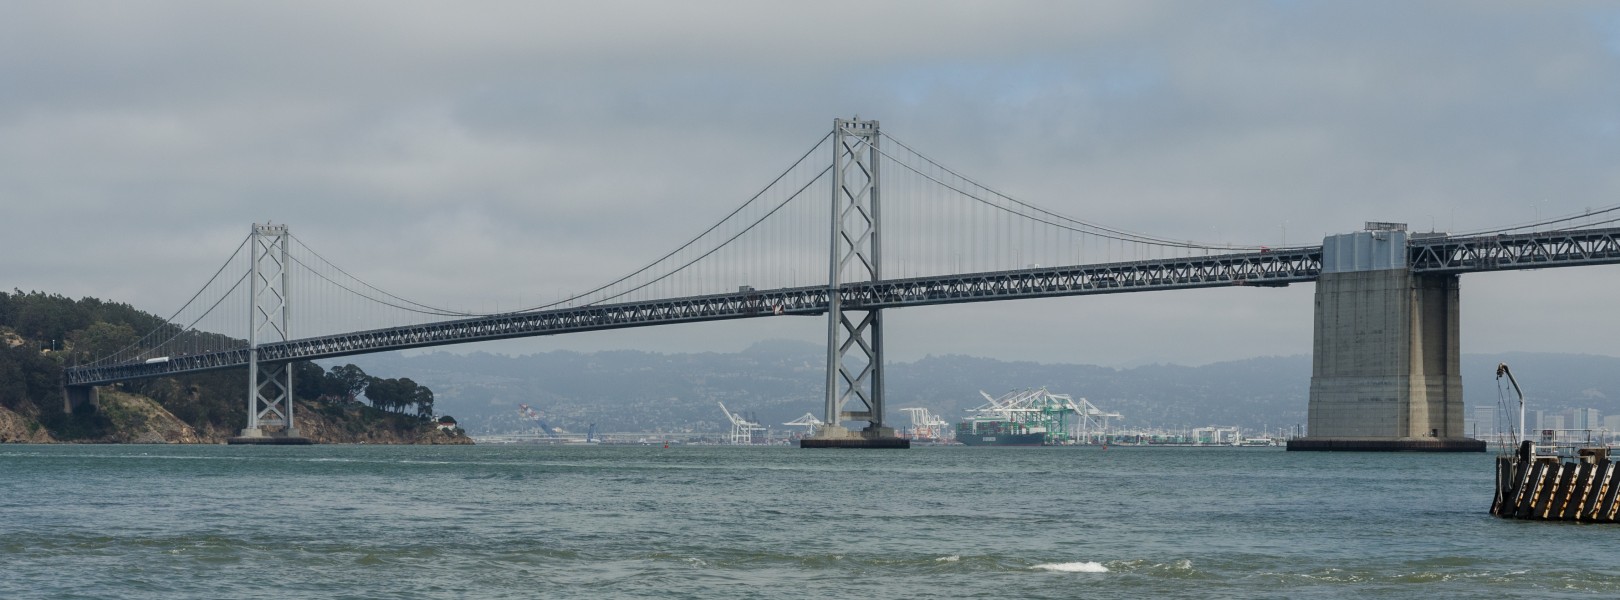 San Francisco–Oakland Bay Bridge, Partial View from Embarcadero 20110804 1